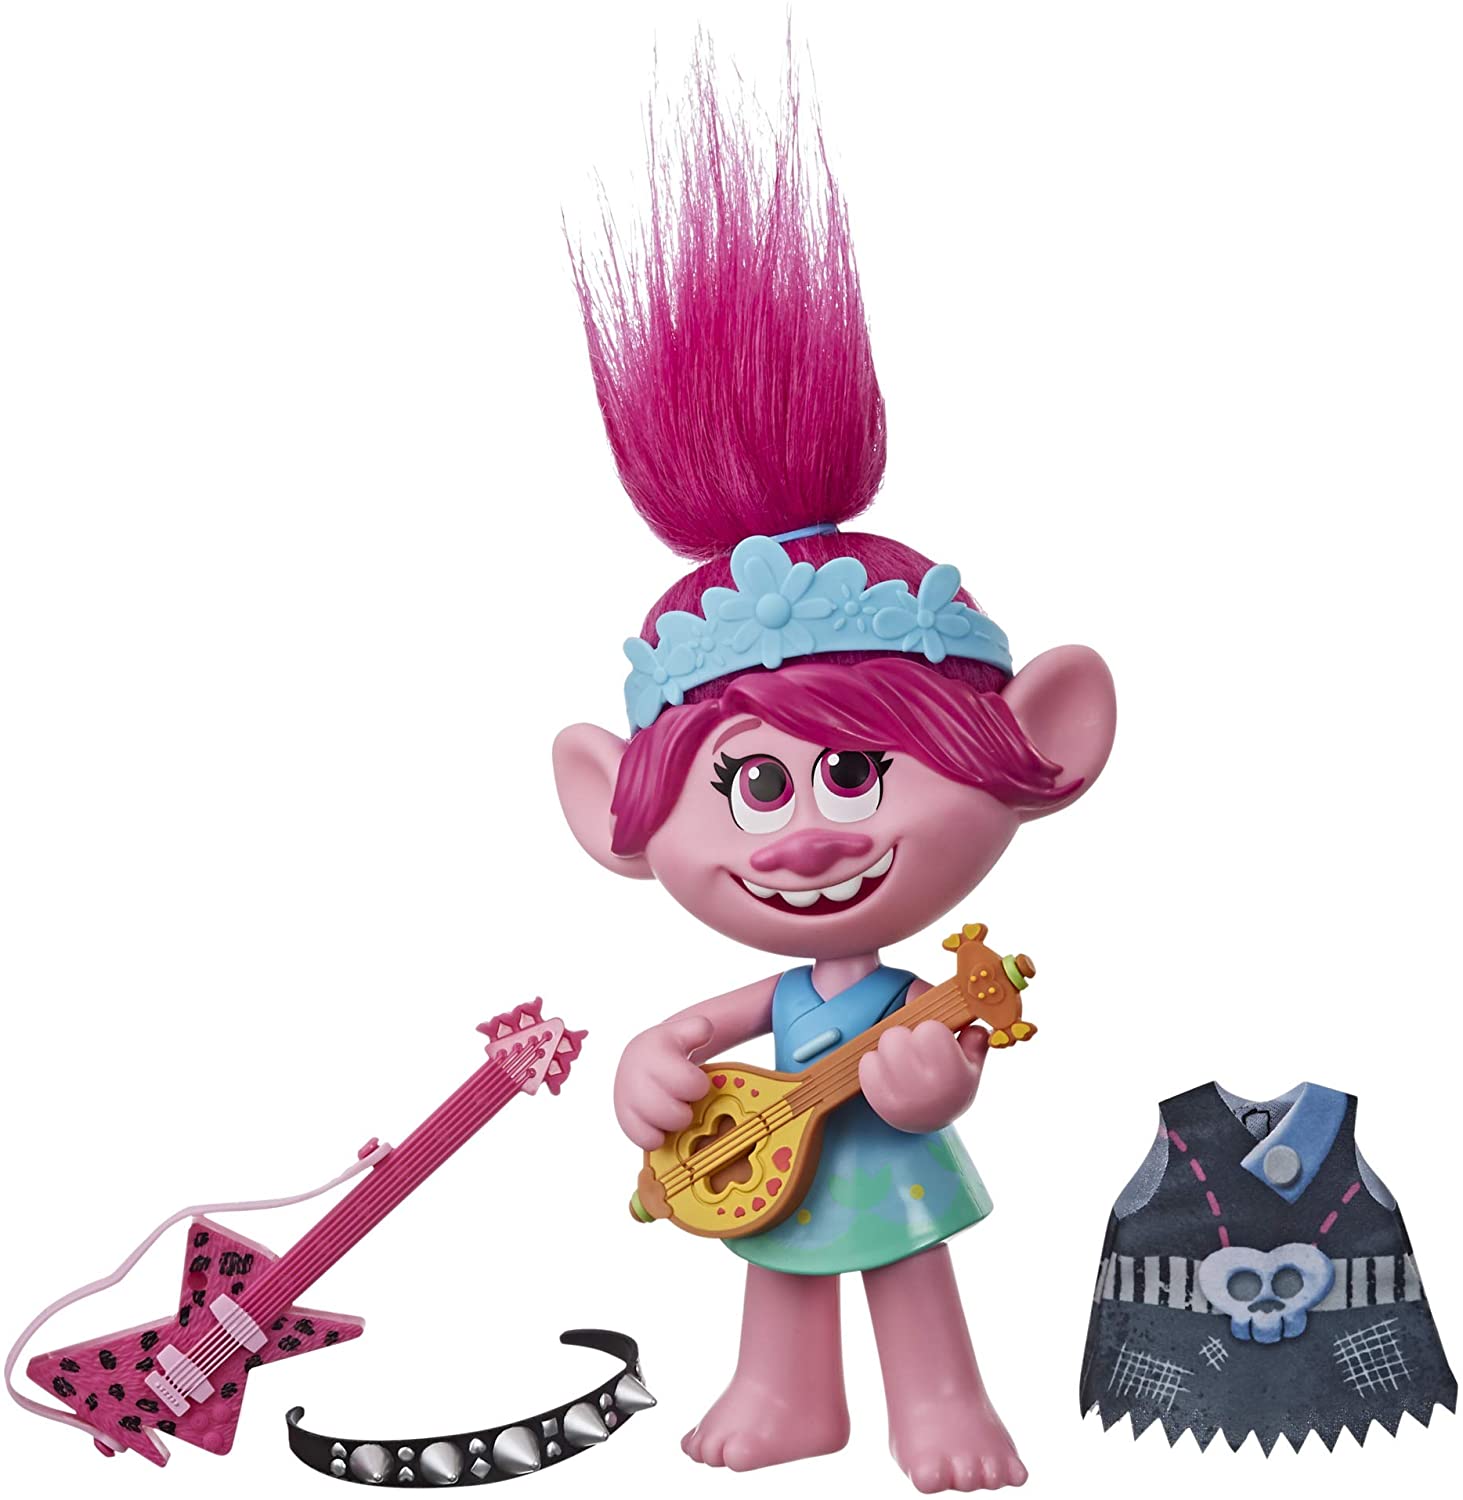 DreamWorks Trolls World Tour Pop-to-Rock Poppy Singing Doll $7.39 - Free Shipping w/Prime